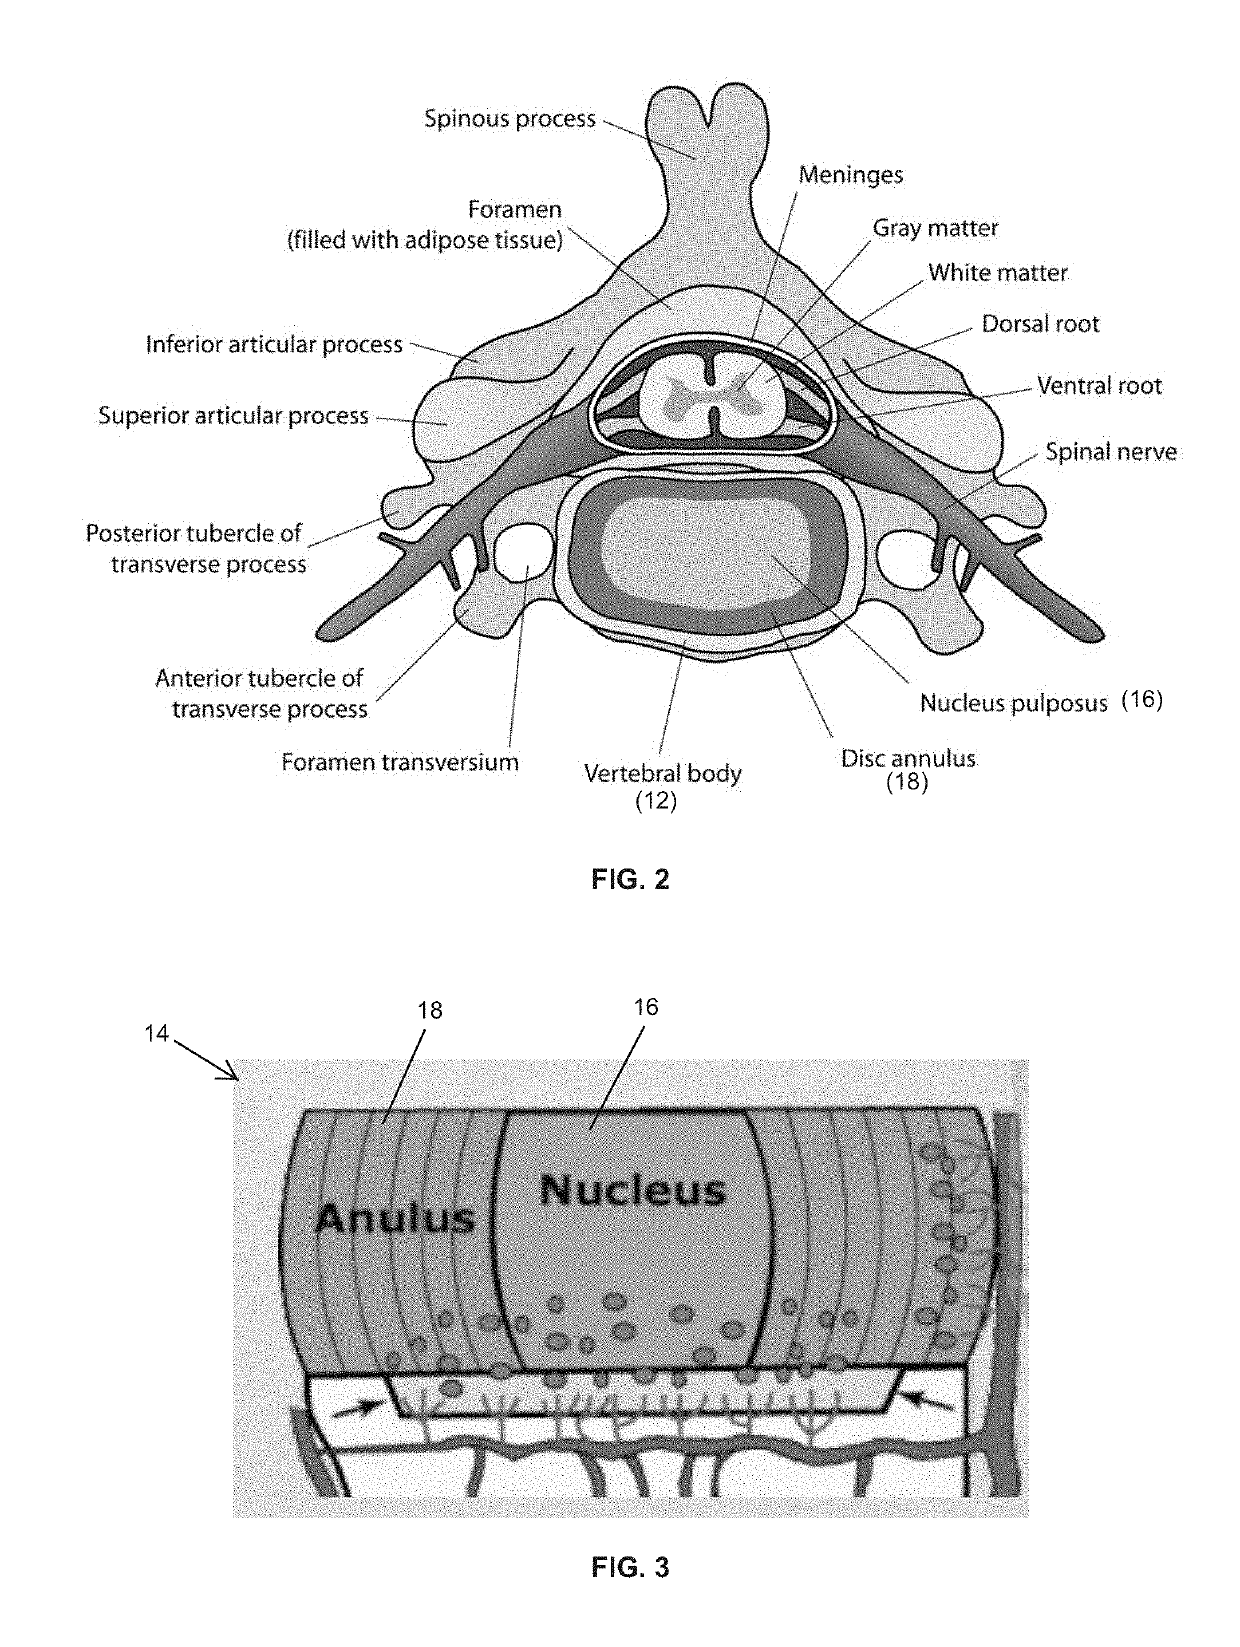 Apparatus, kit, and method for percutaneous intervertebral disc restoration